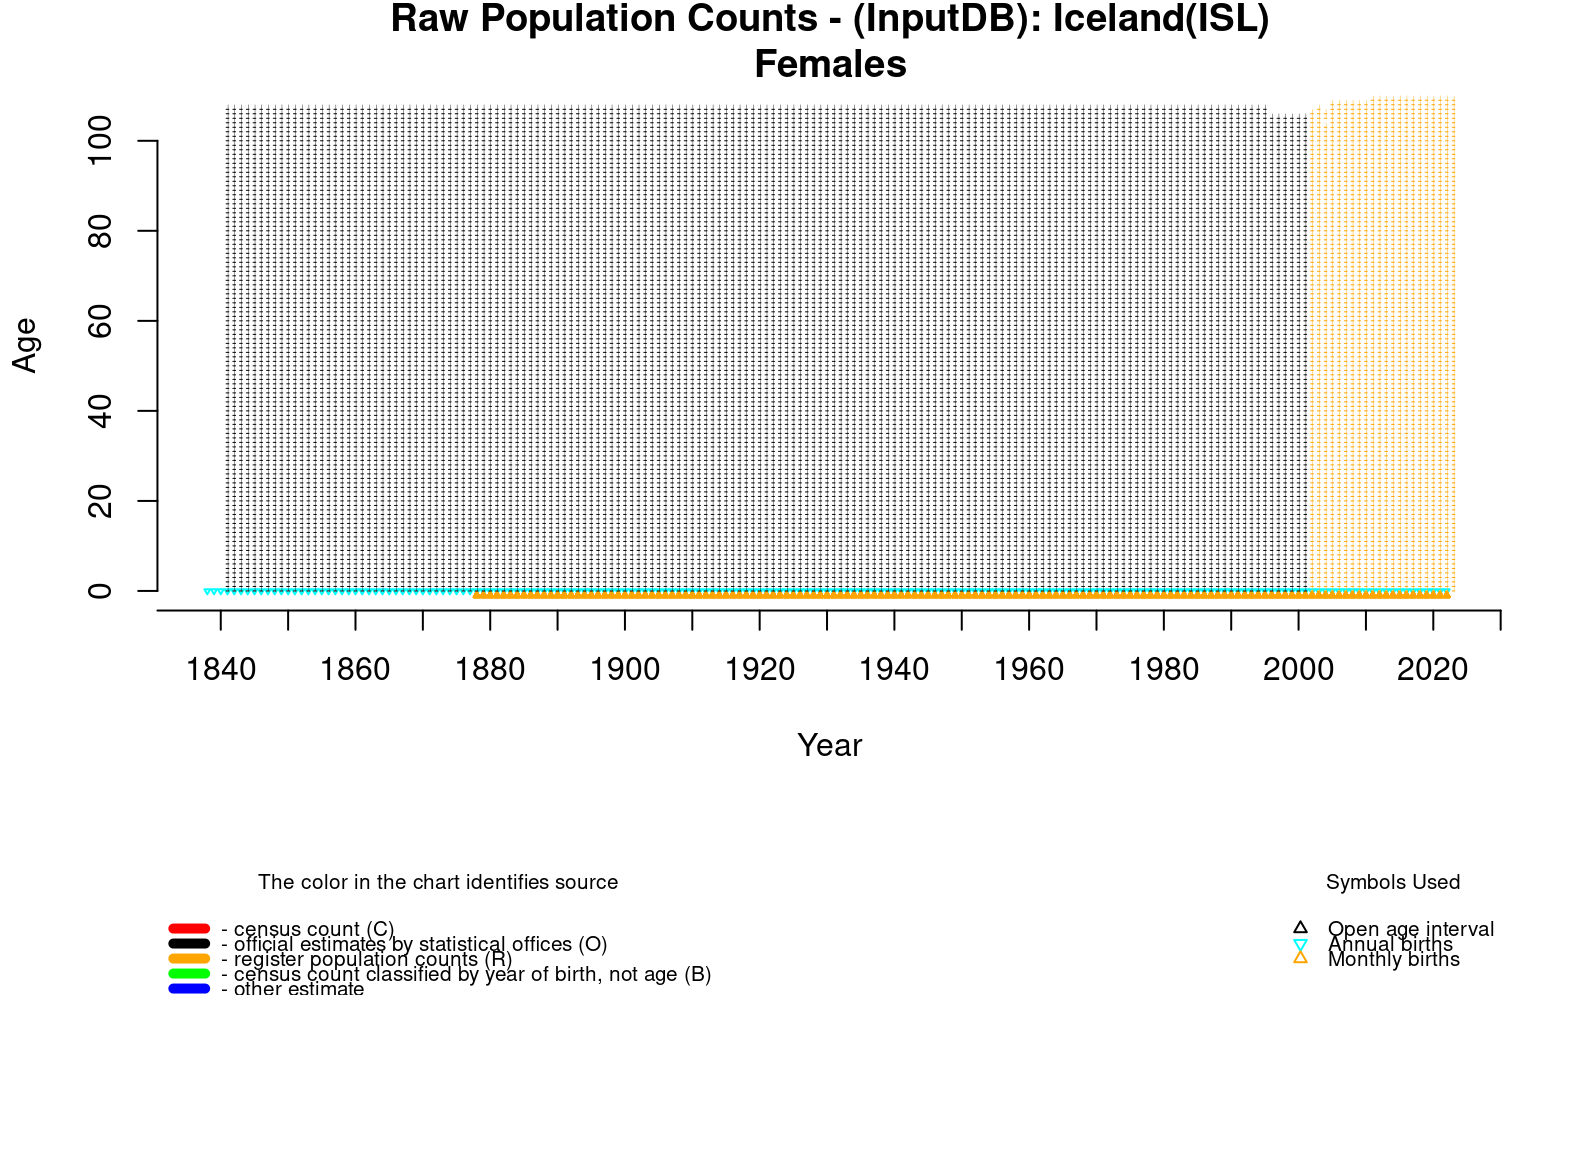  [ Raw population counts - Females ] 